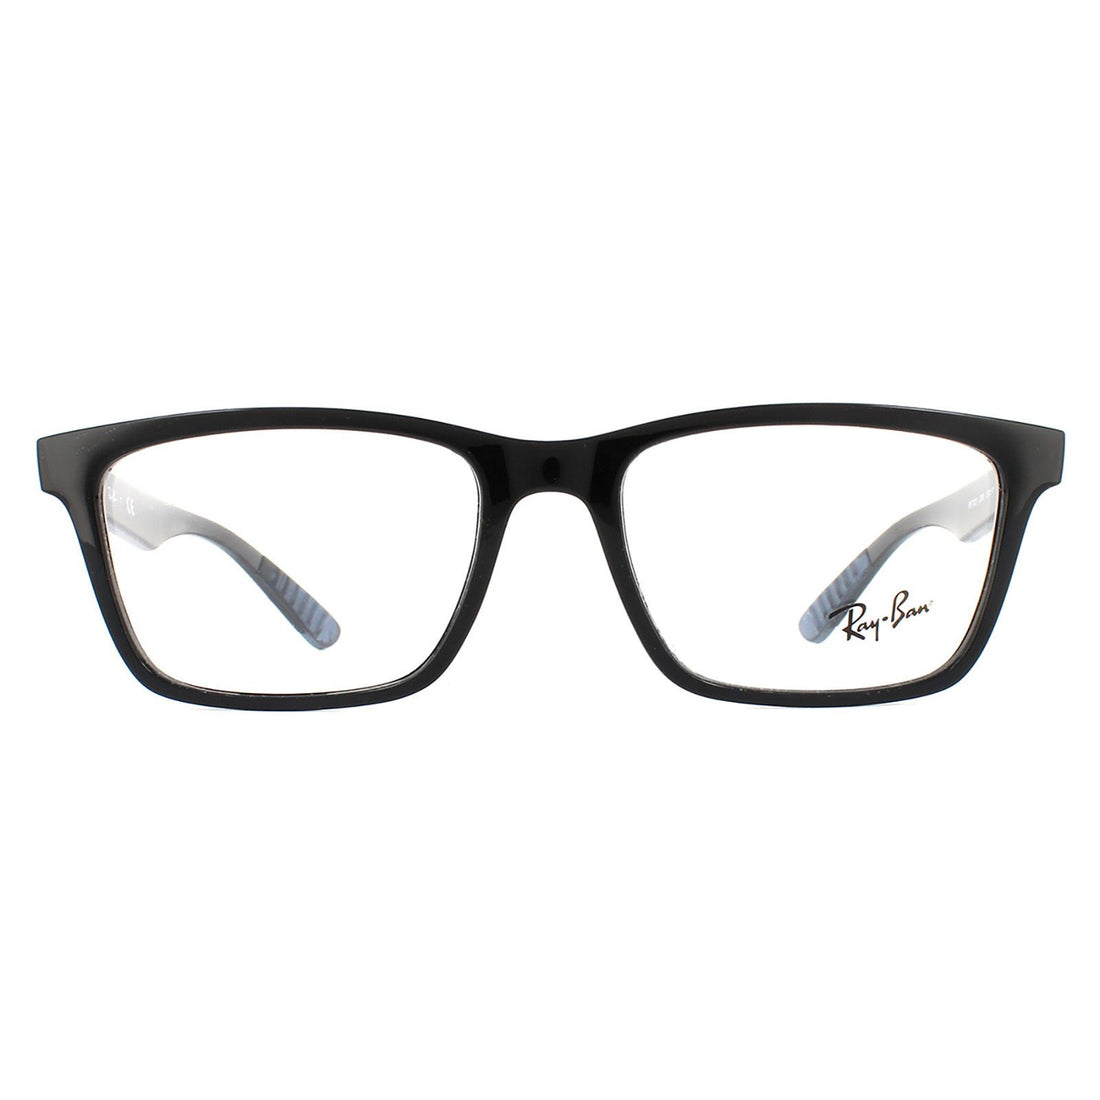 Ray-Ban 7025 Glasses Frames Shiny Black